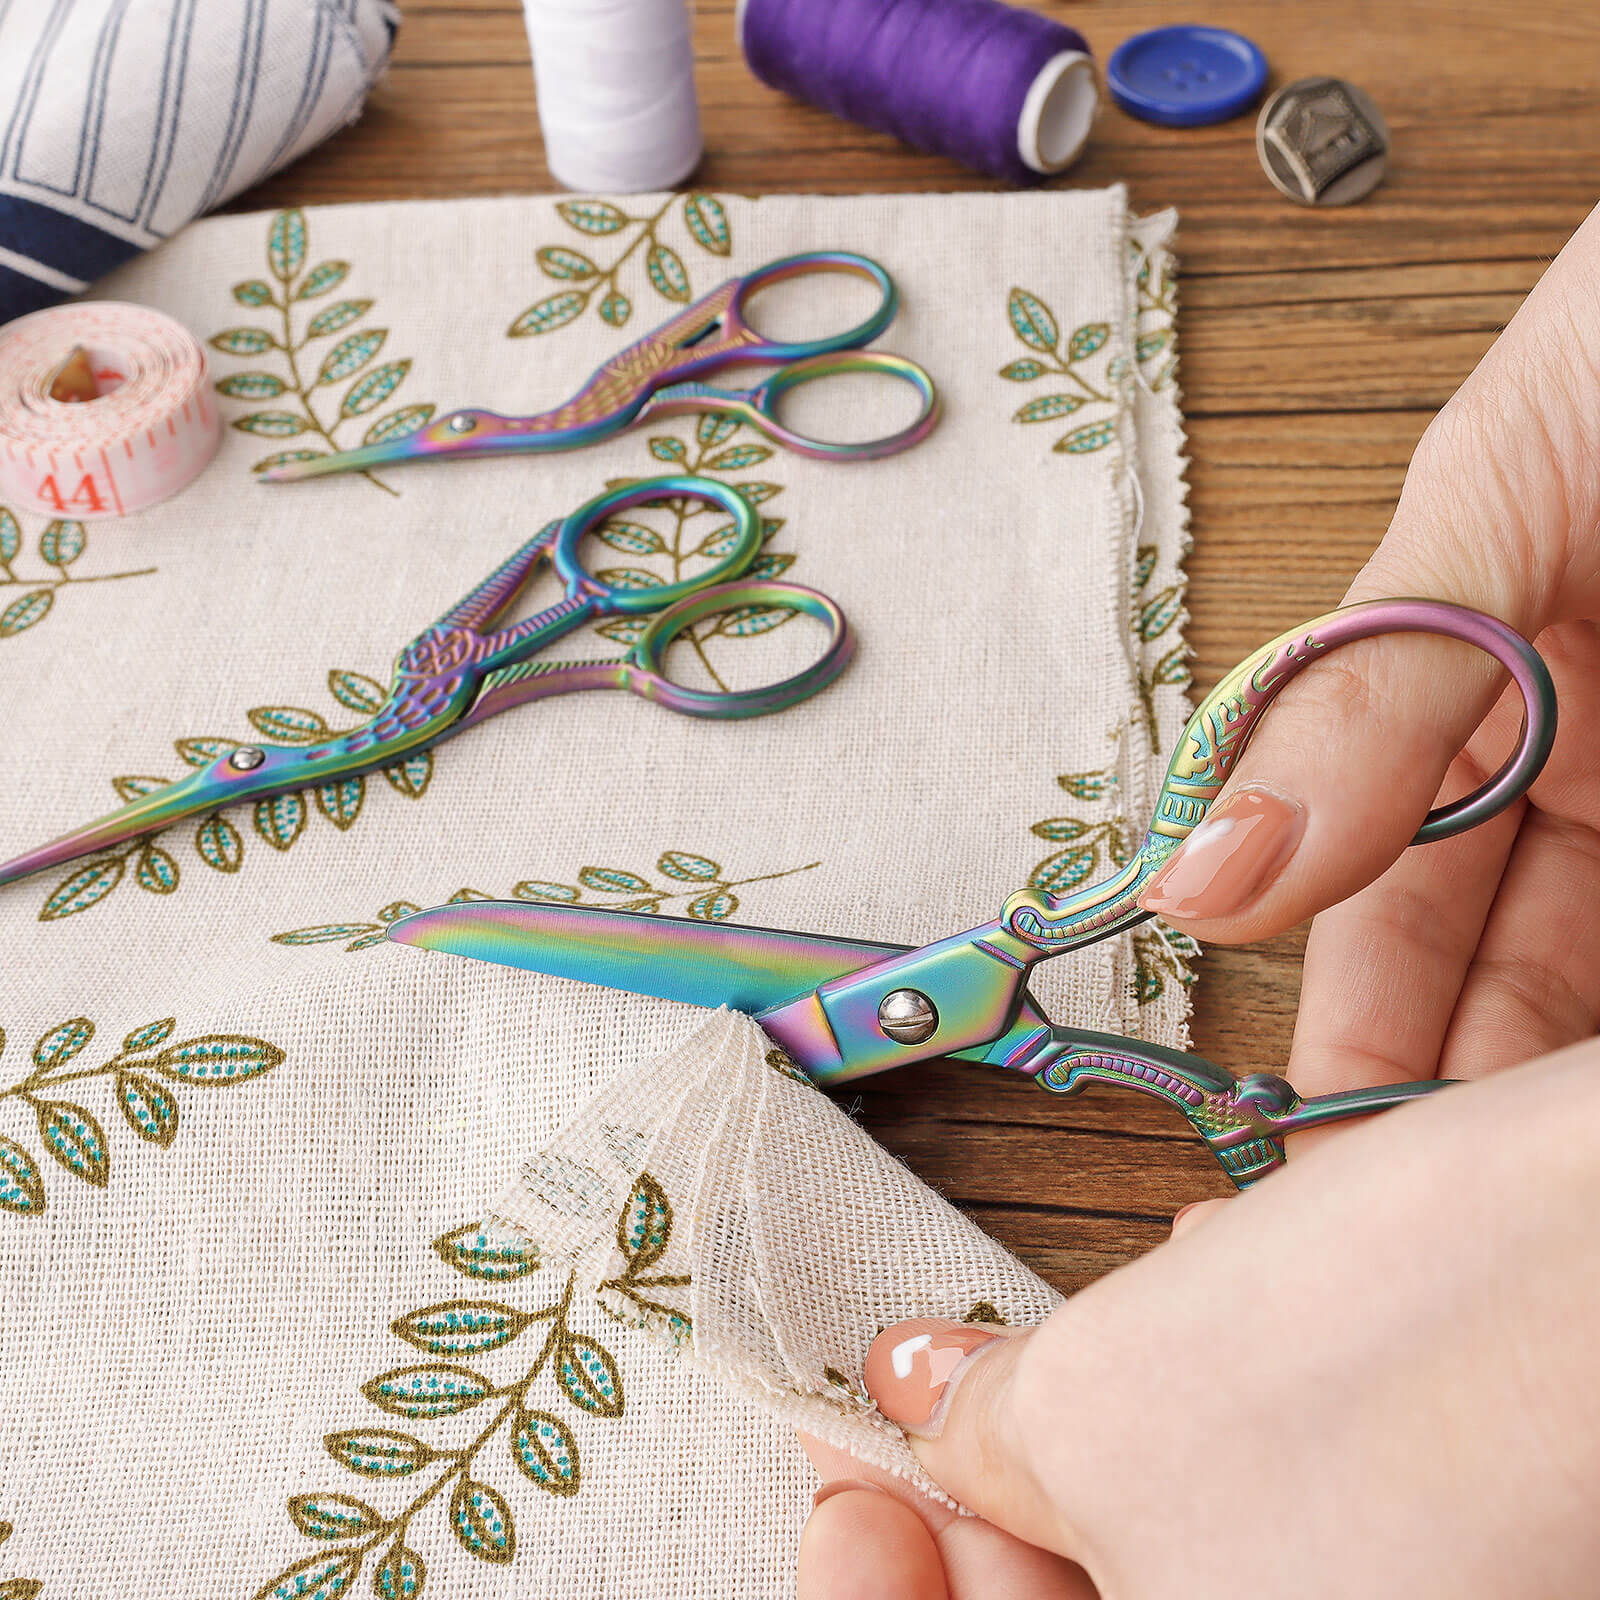 Asdirne Fabric Scissors & Embroidery Scissors Set